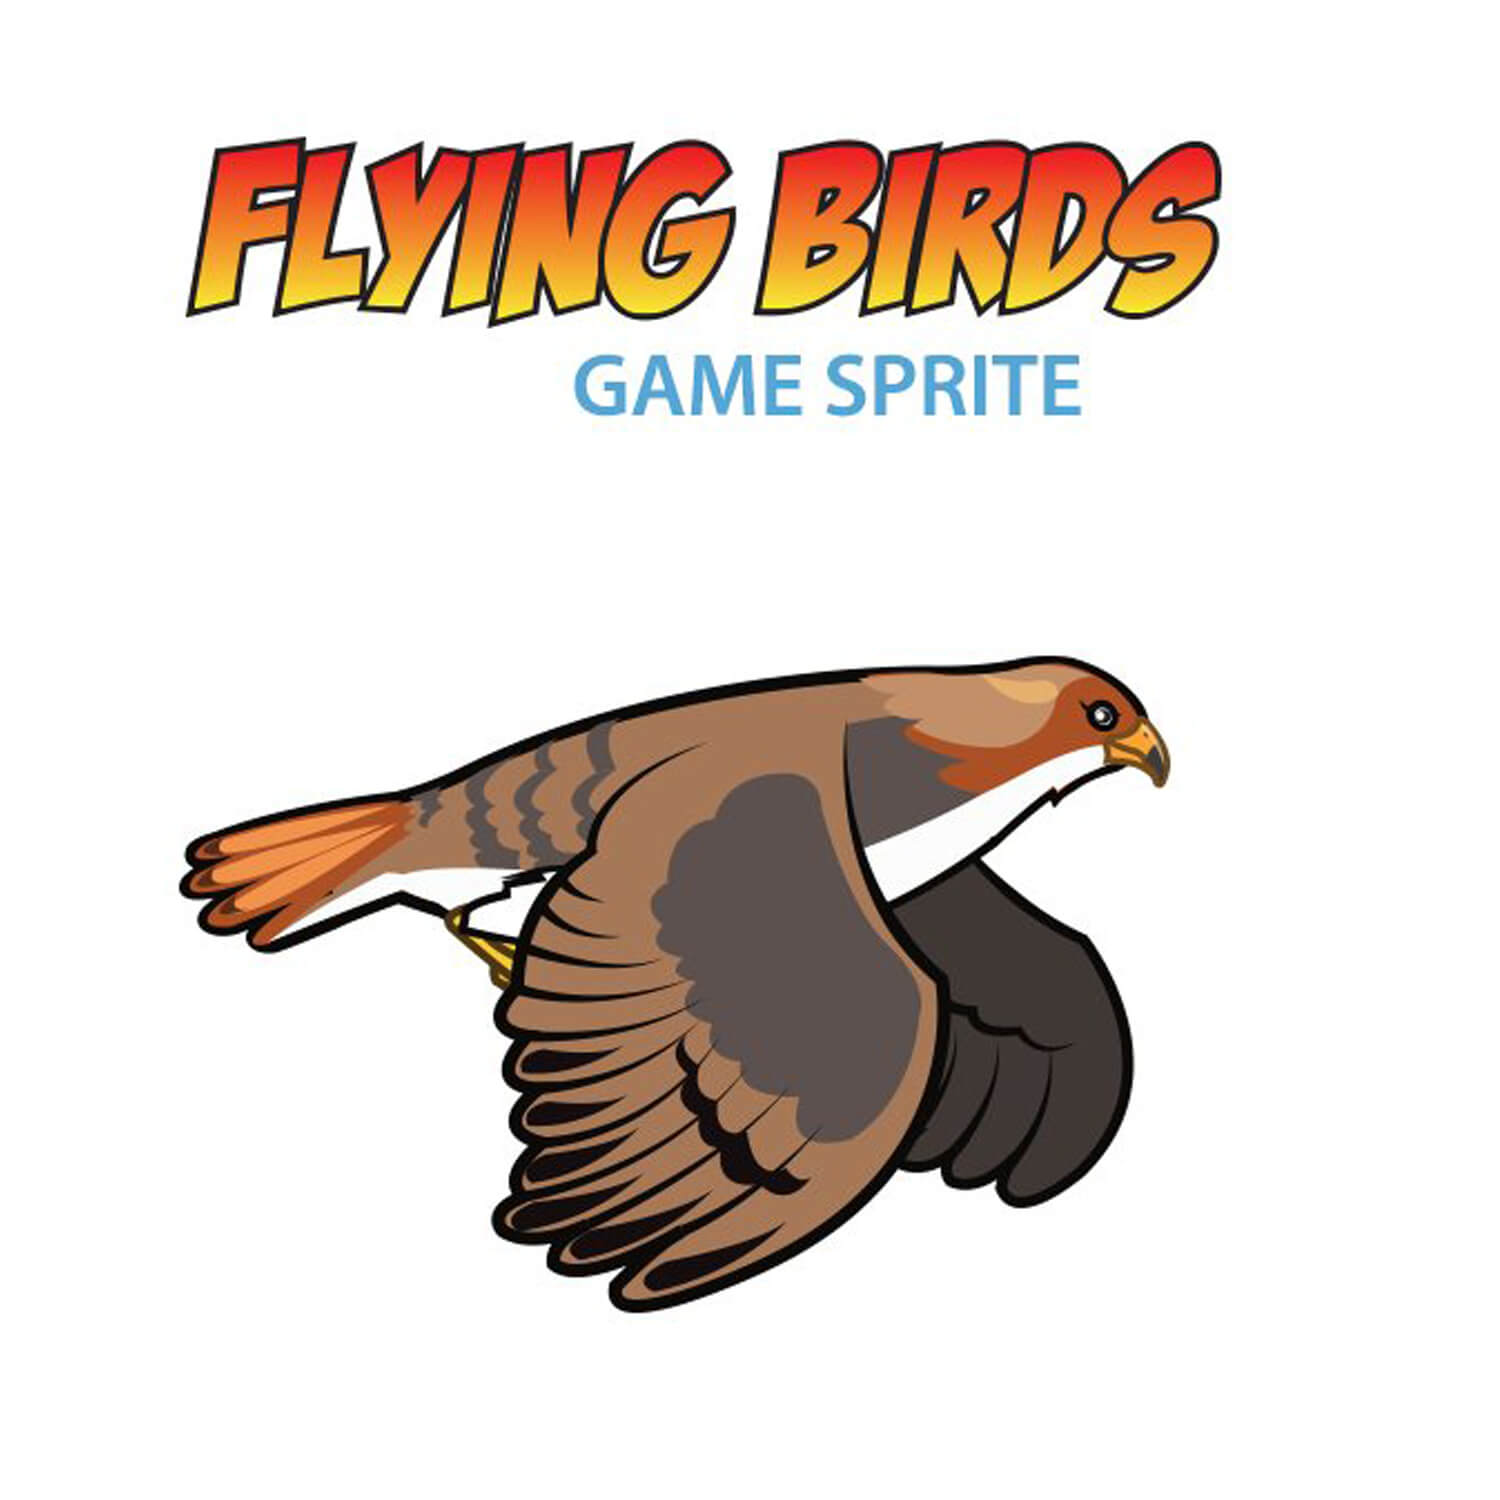 Flying birds game sprite.